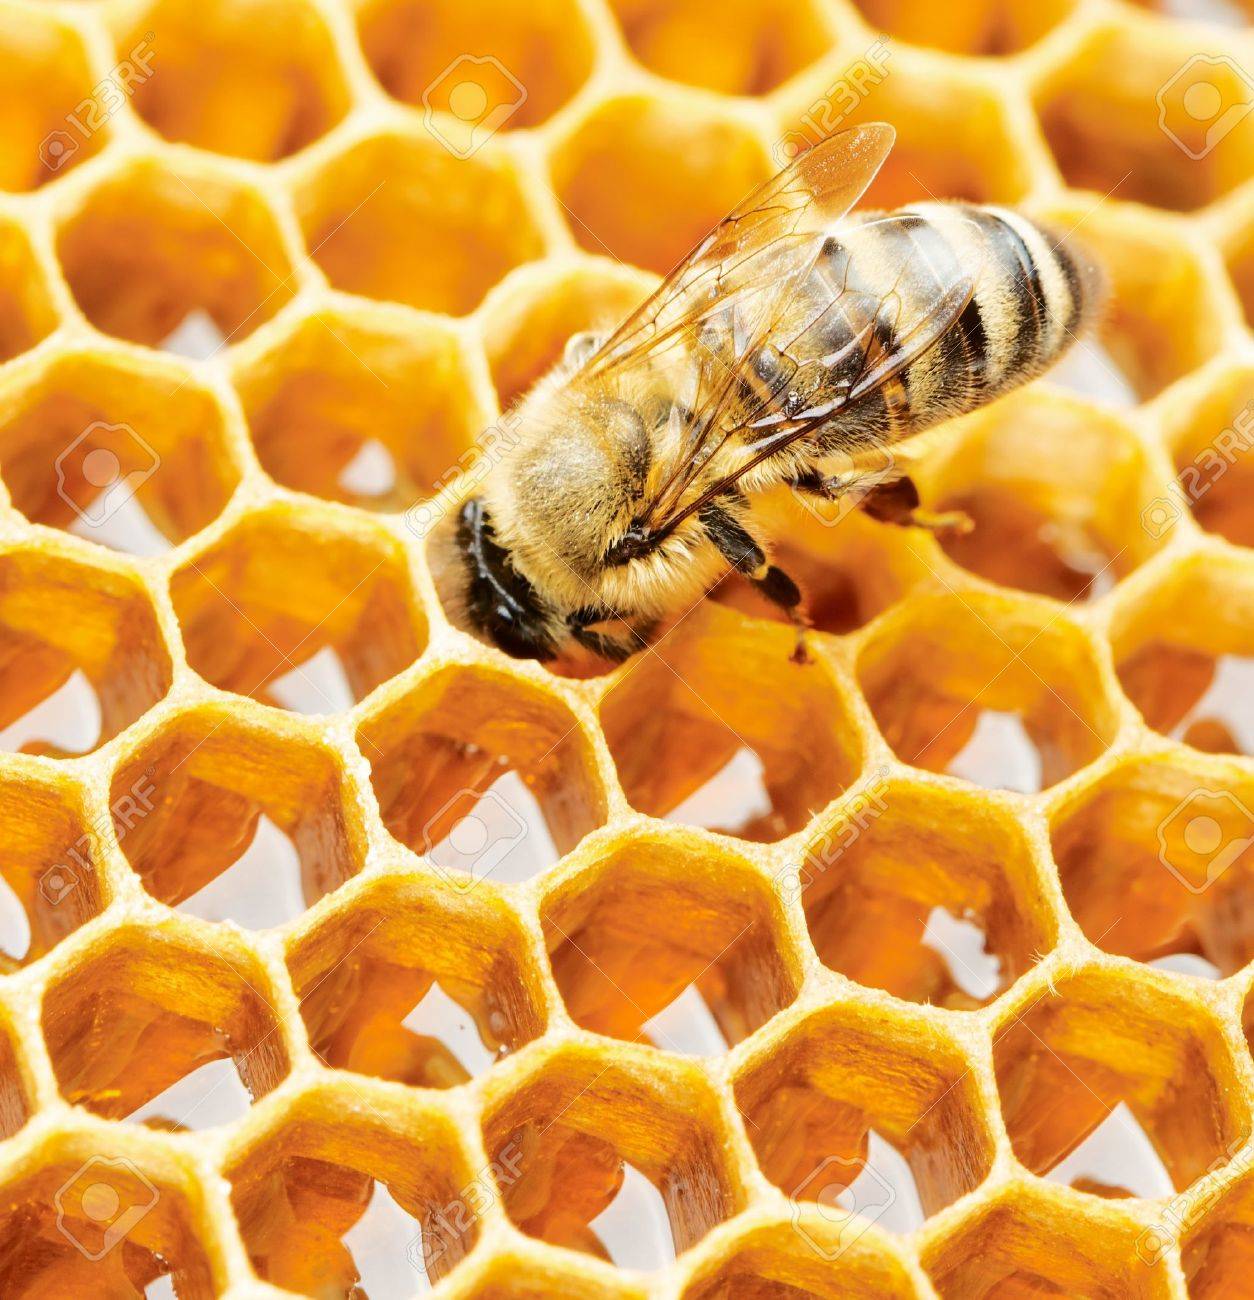 20997250-working-bee-on-honeycomb.jpg